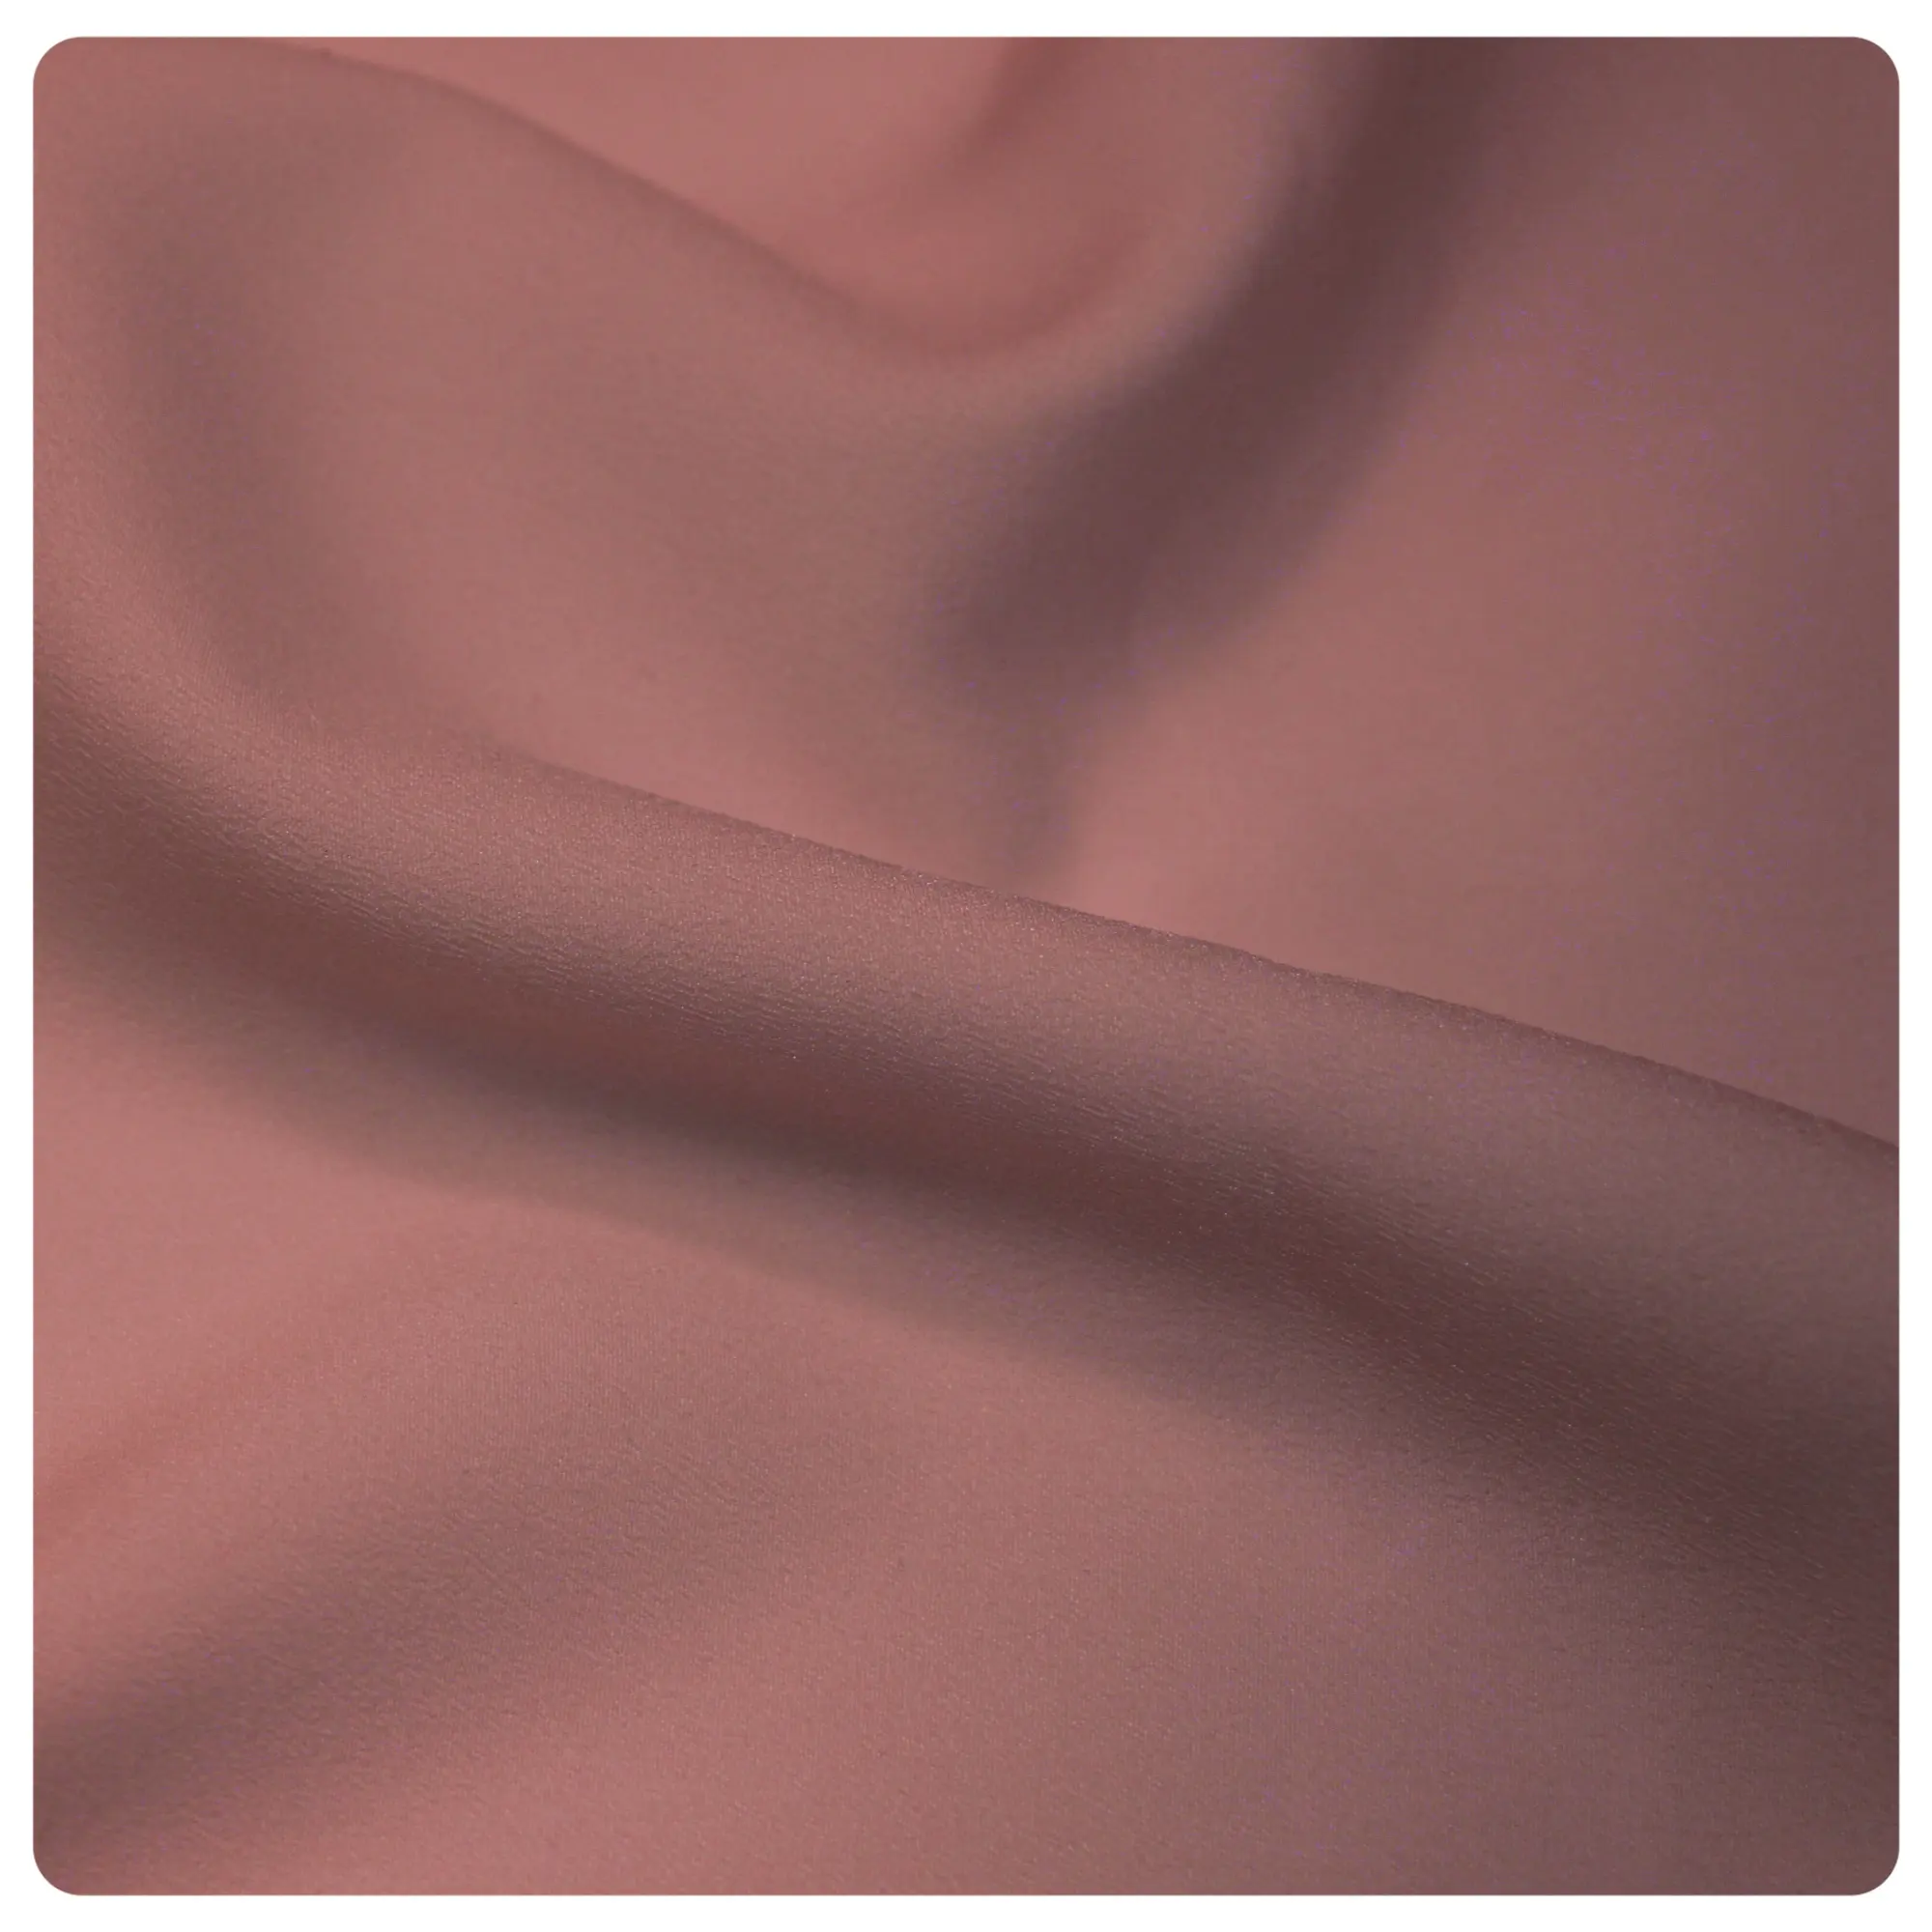 Cheap Price Light weight crepe fabrics 70-80g 100%polyester chiffon Stretch crepe fabrics for clothing dress